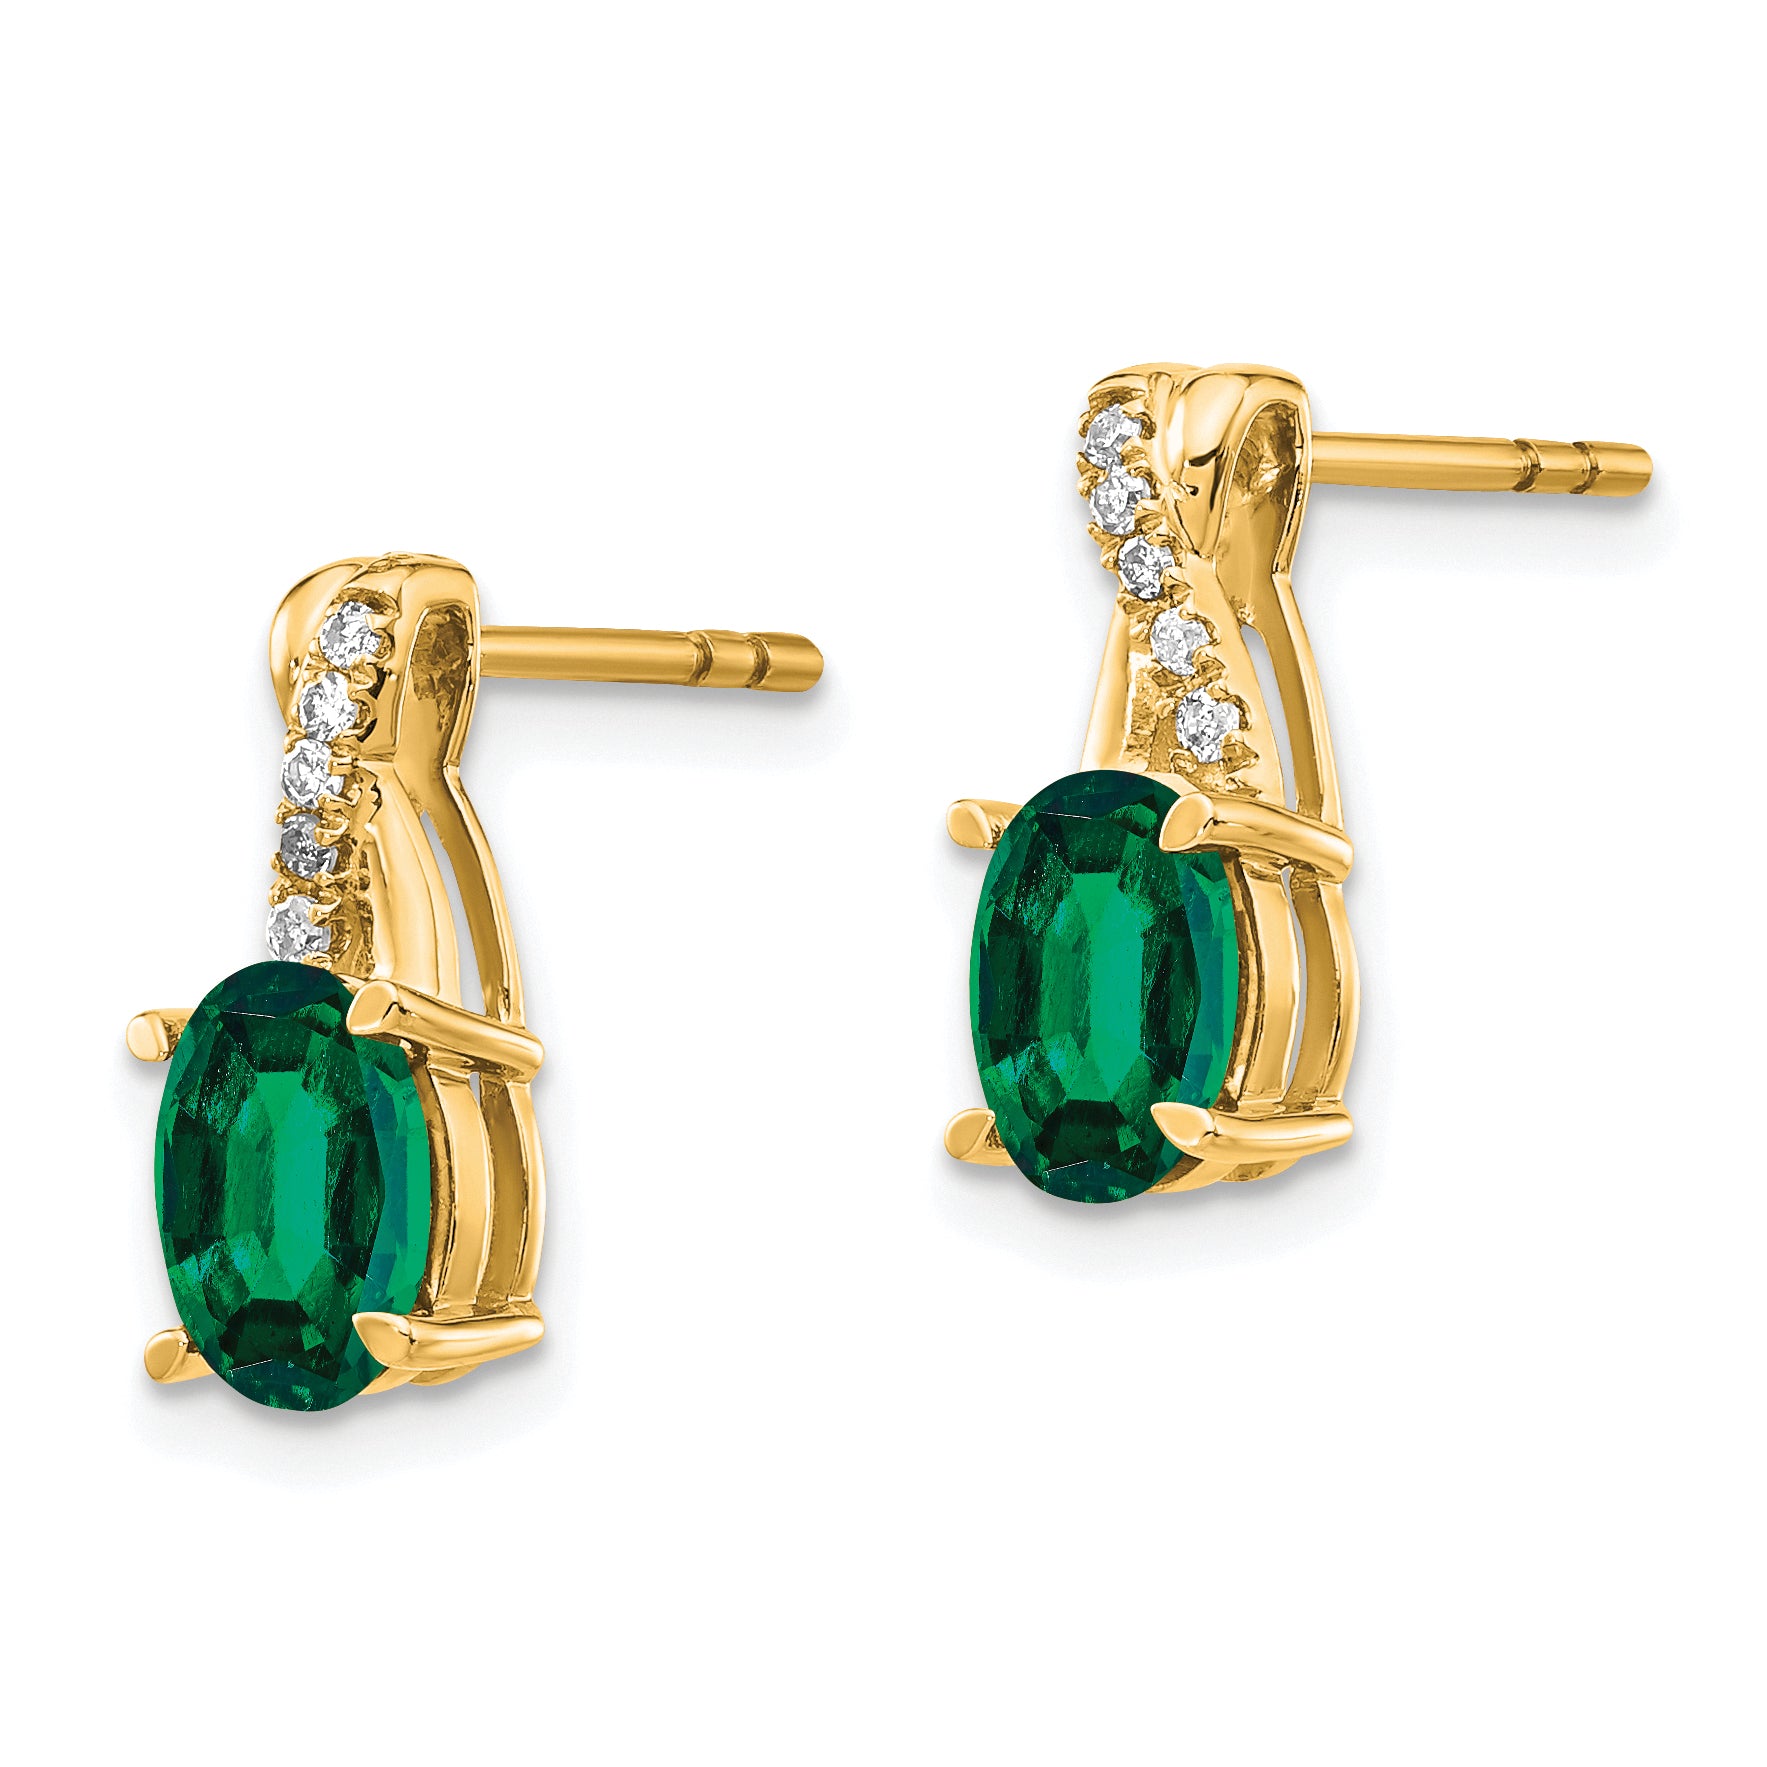 10k Created Emerald and Diamond Earrings